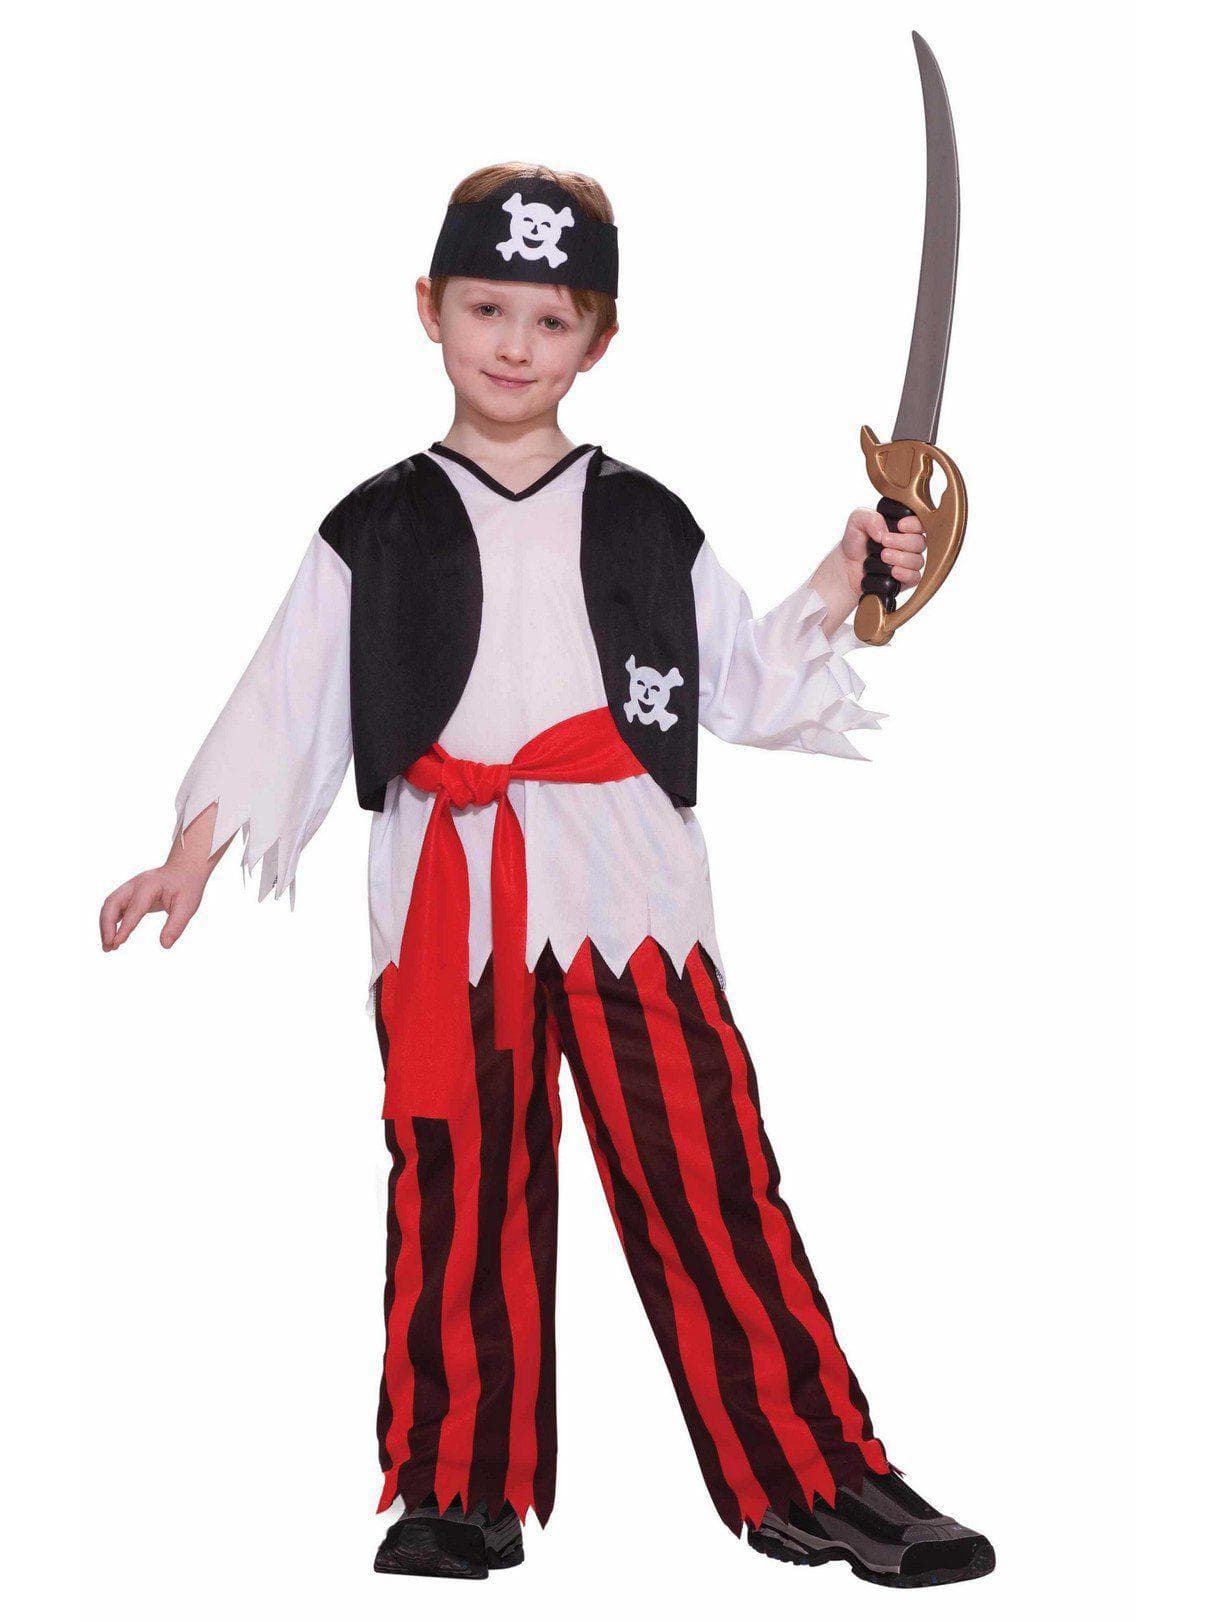 Kid's Pirate Costume - costumes.com